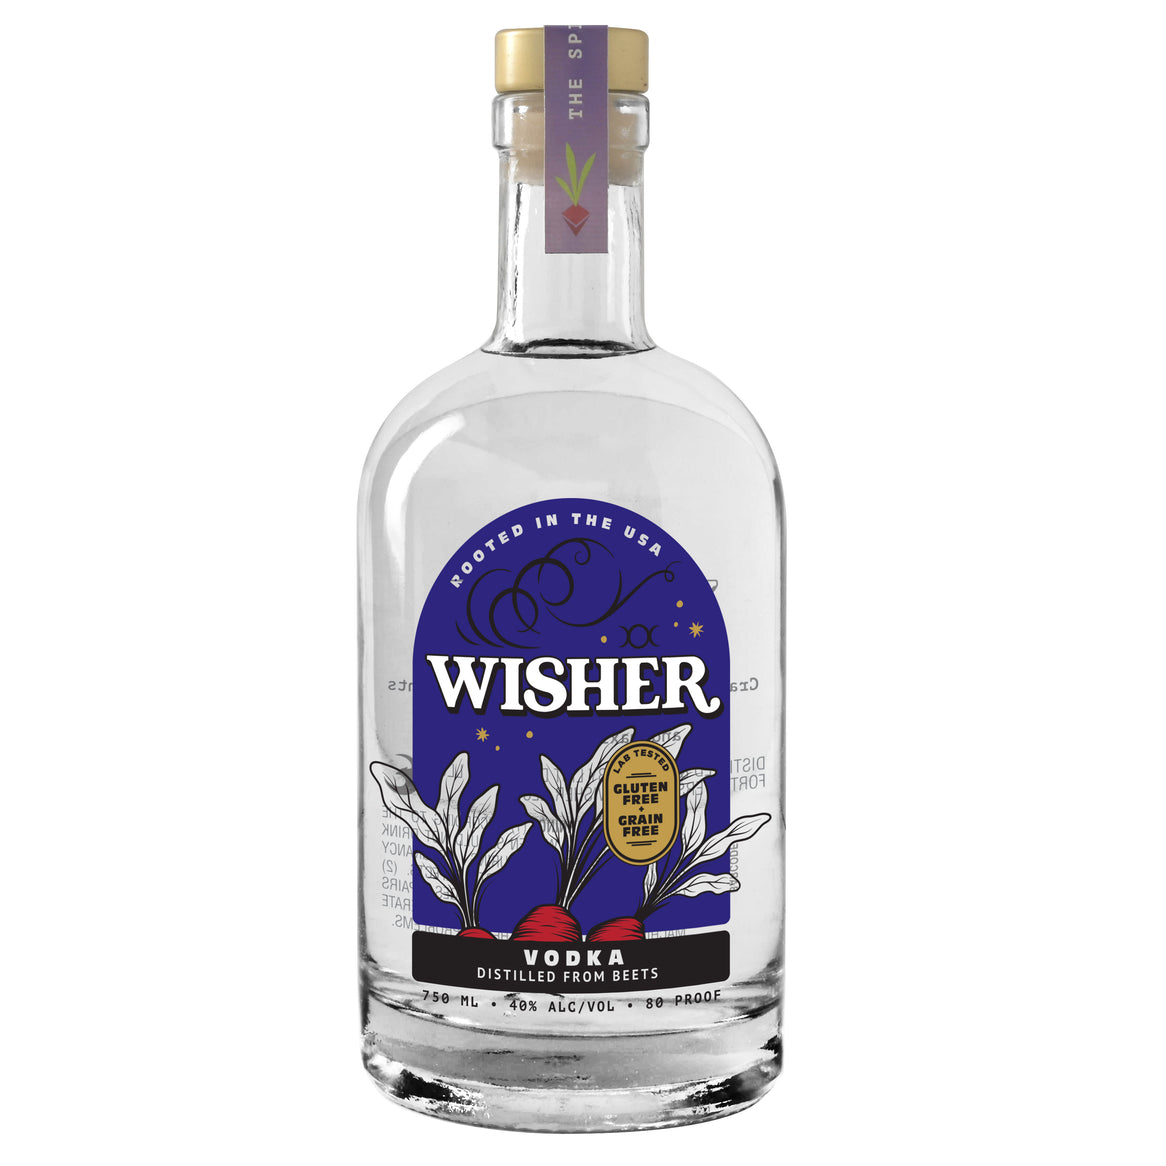 Wisher Vodka